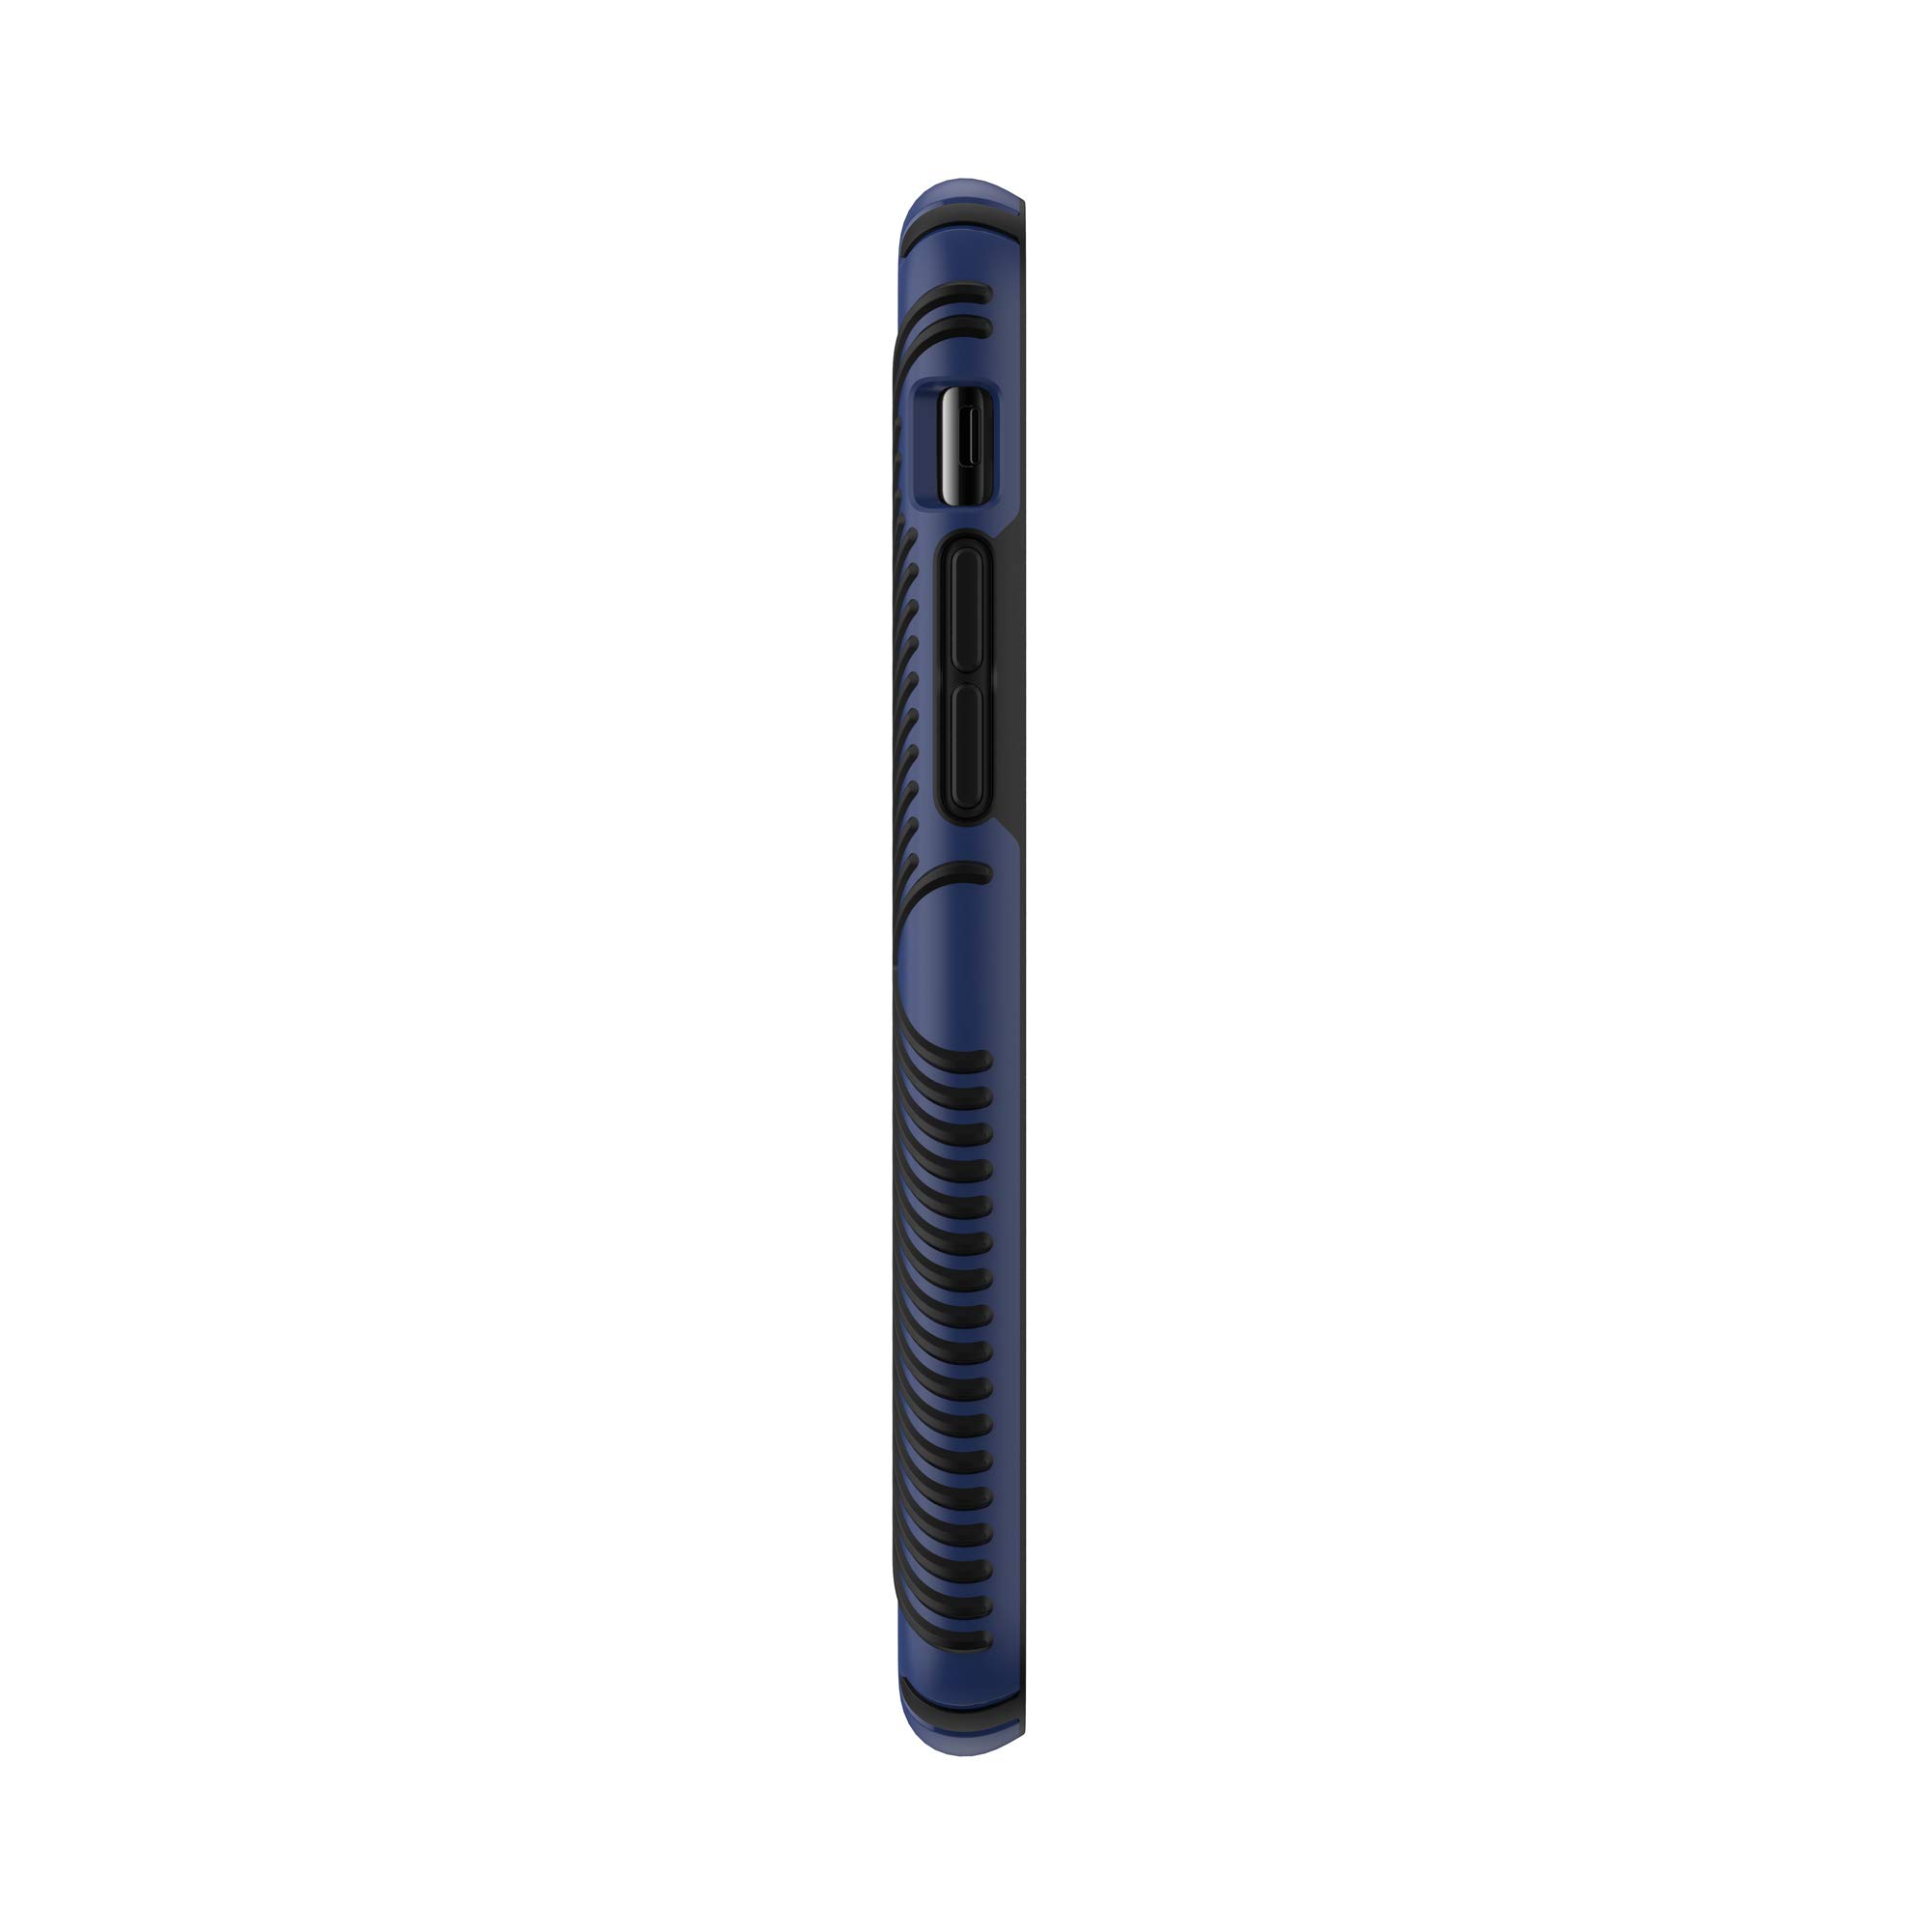 Speck Products Presidio Grip iPhone 11 Pro Case, Polycarbonate (PC), IMPACTIUM,Slim Fit,Coastal Blue/Black (129892-8531)